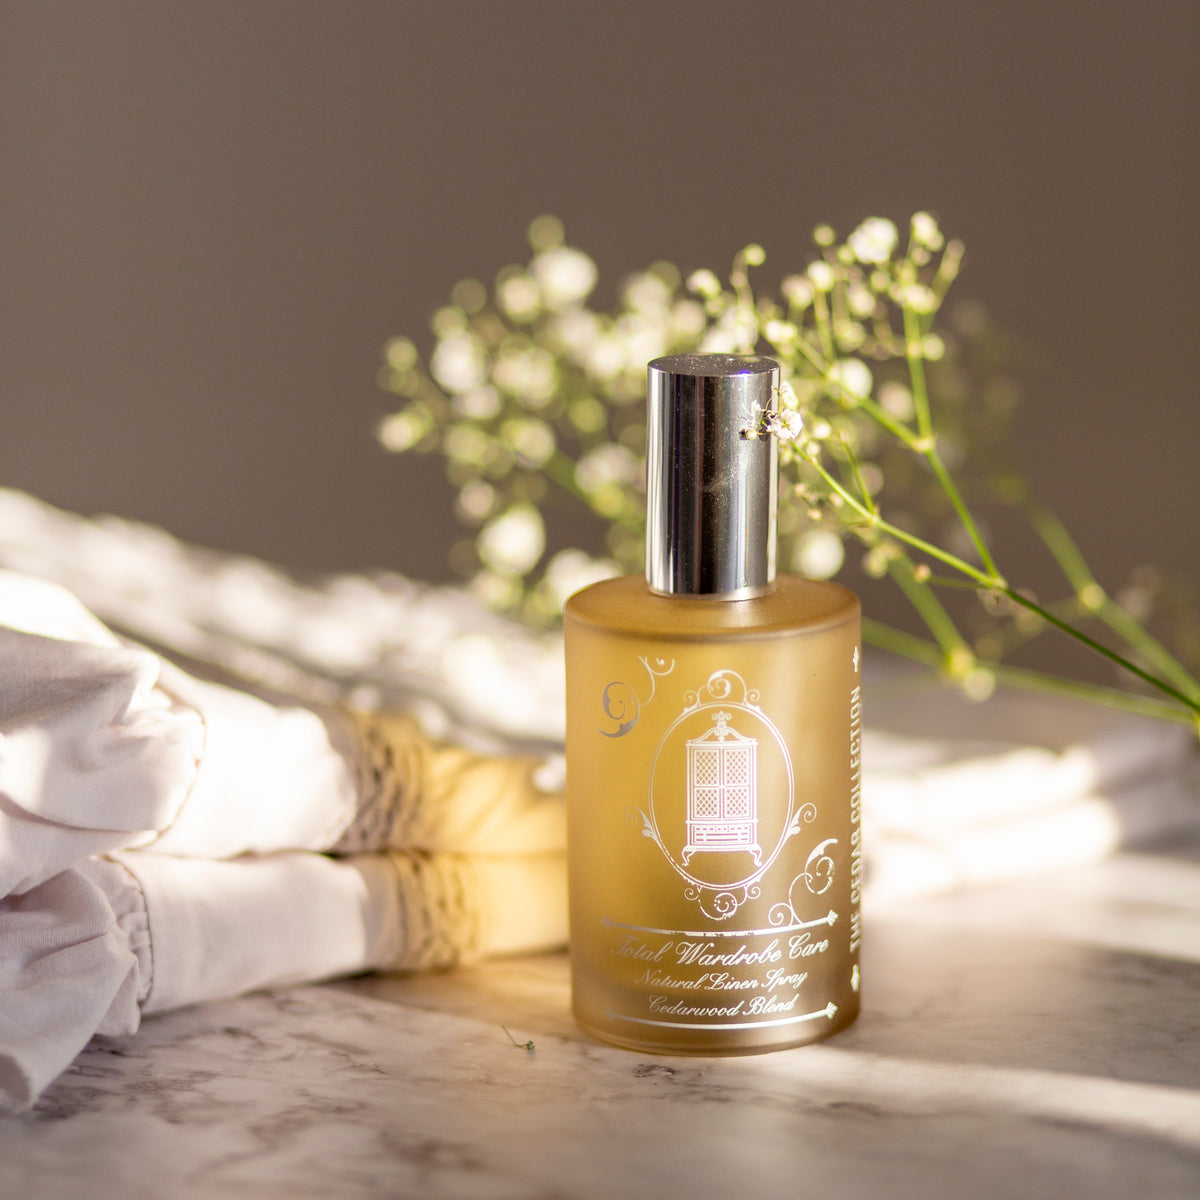 Golden bottle of cedarwood linen spray beside folded linen and flowers to reverse